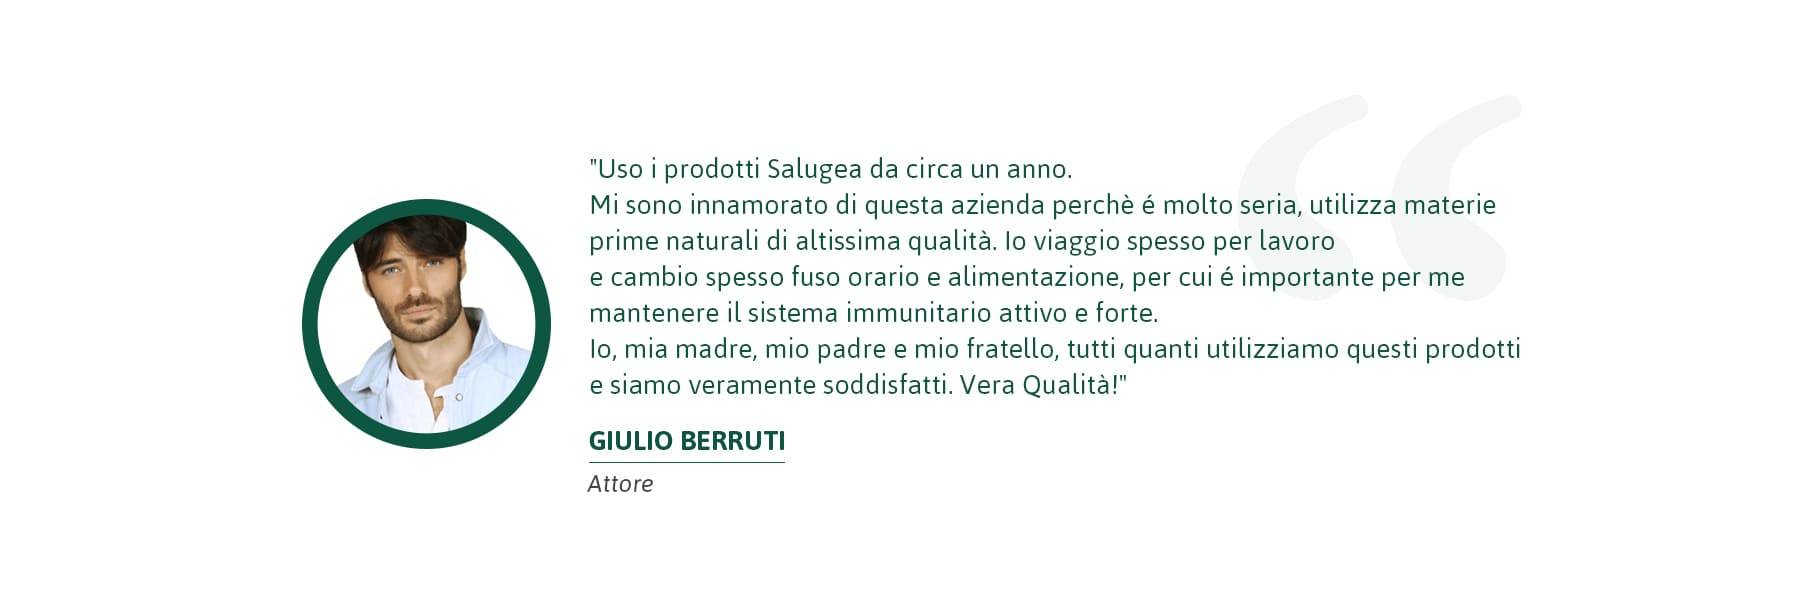 Giulio Berruti